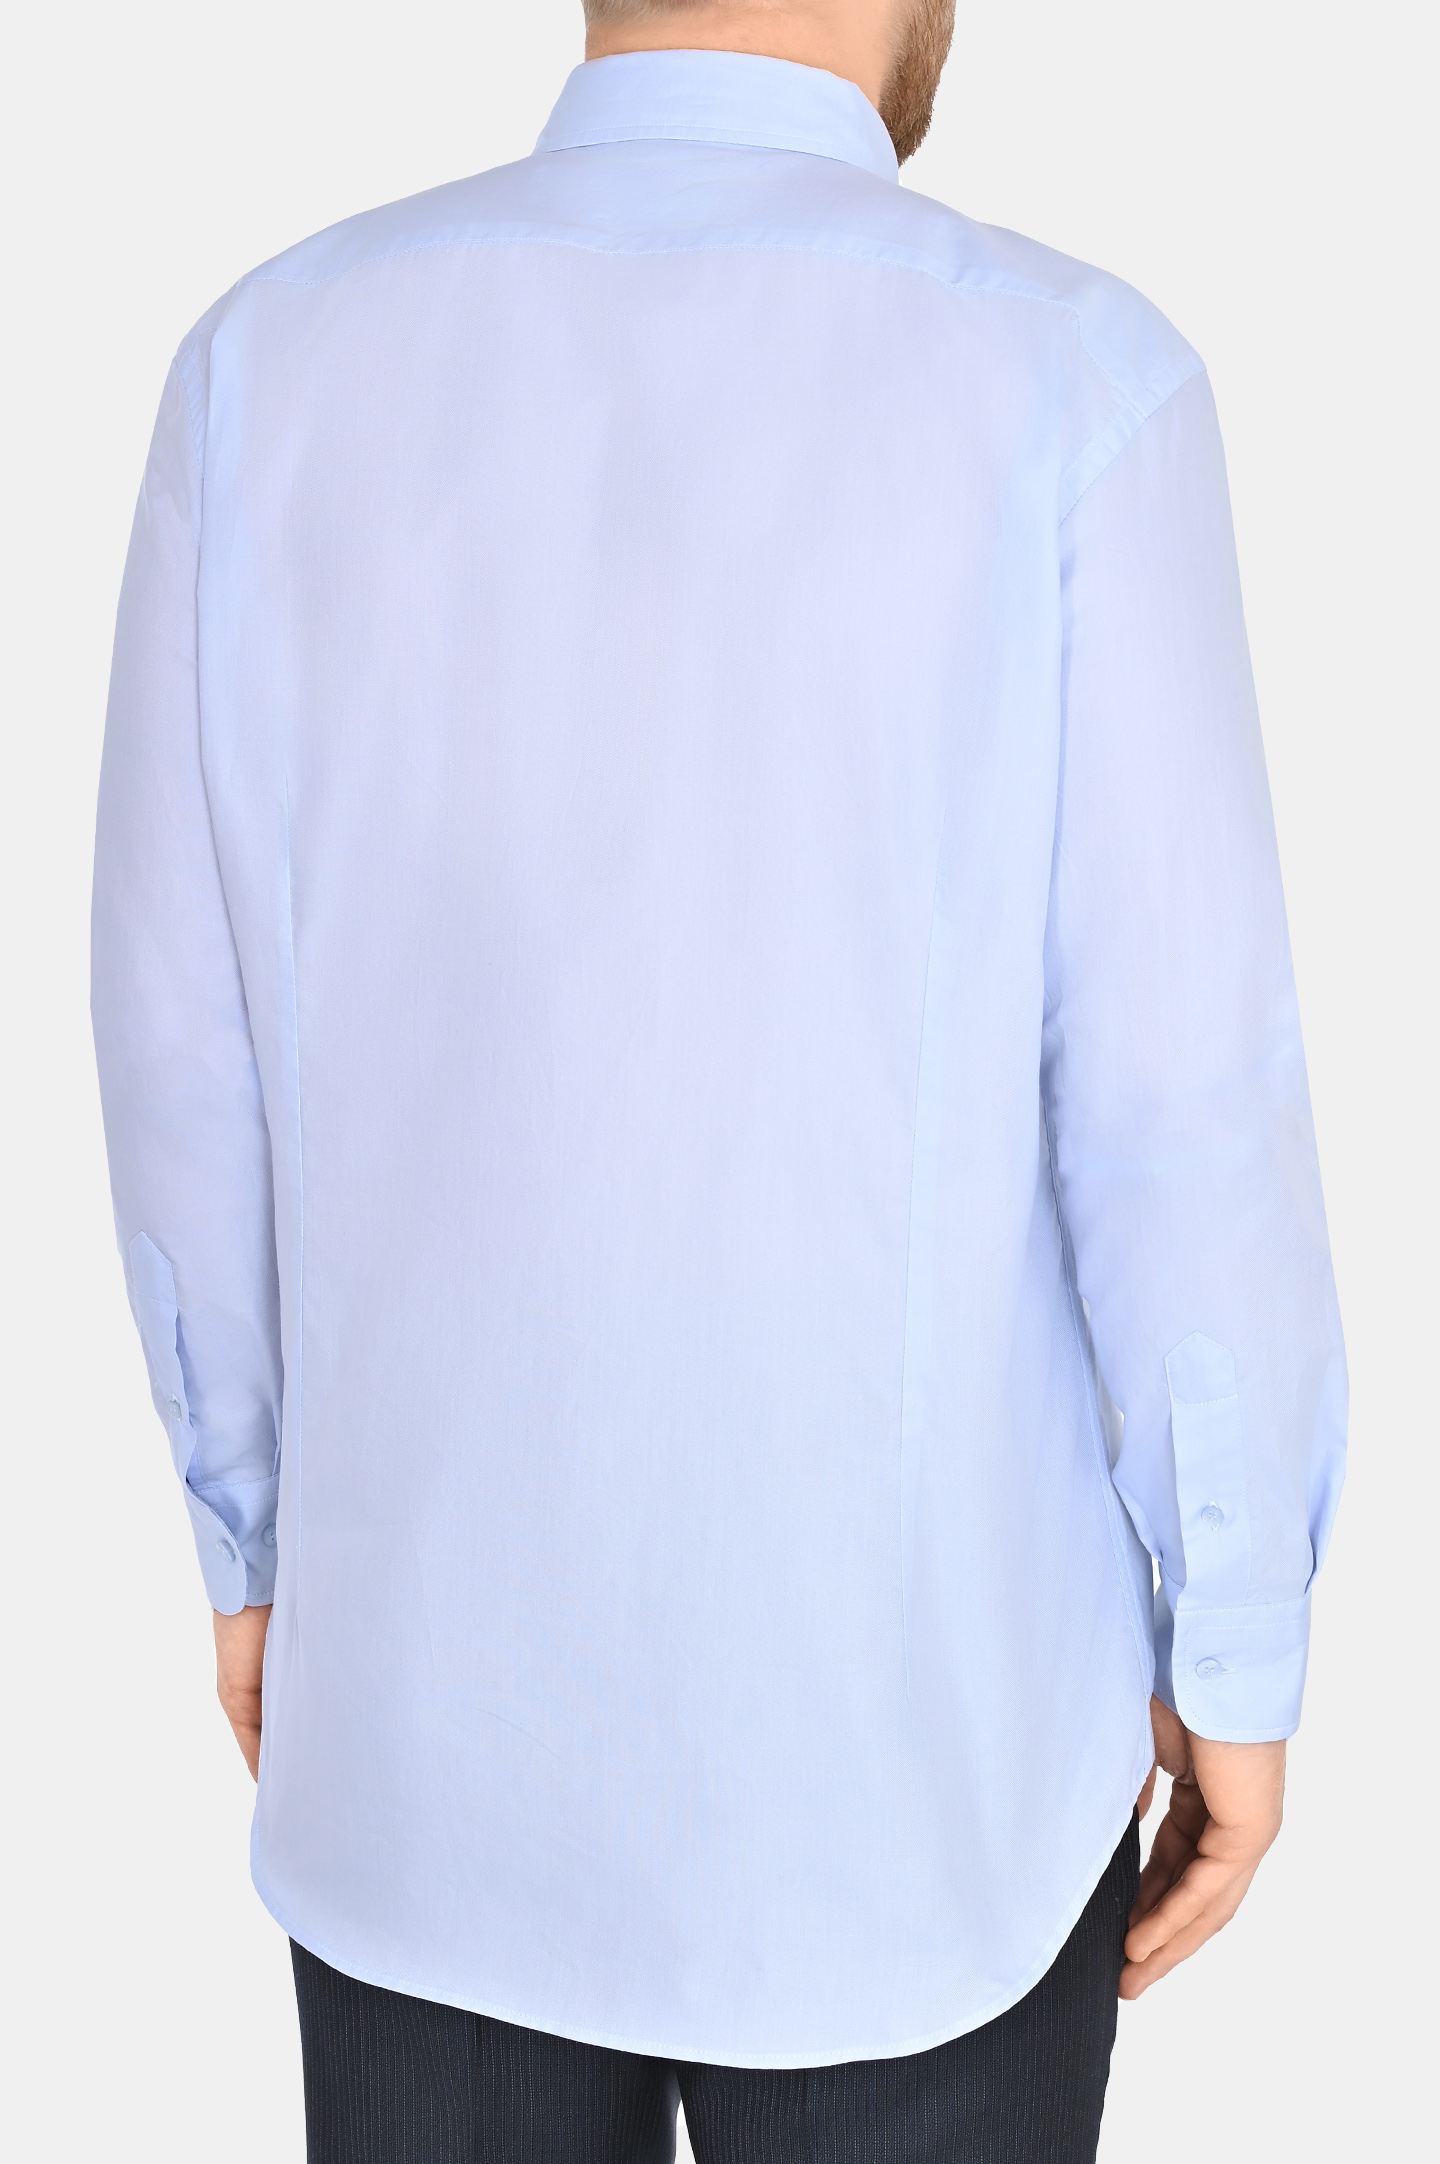 Хлопковая рубашка ETRO MRIB0004 AV201, цвет: Голубой, Мужской